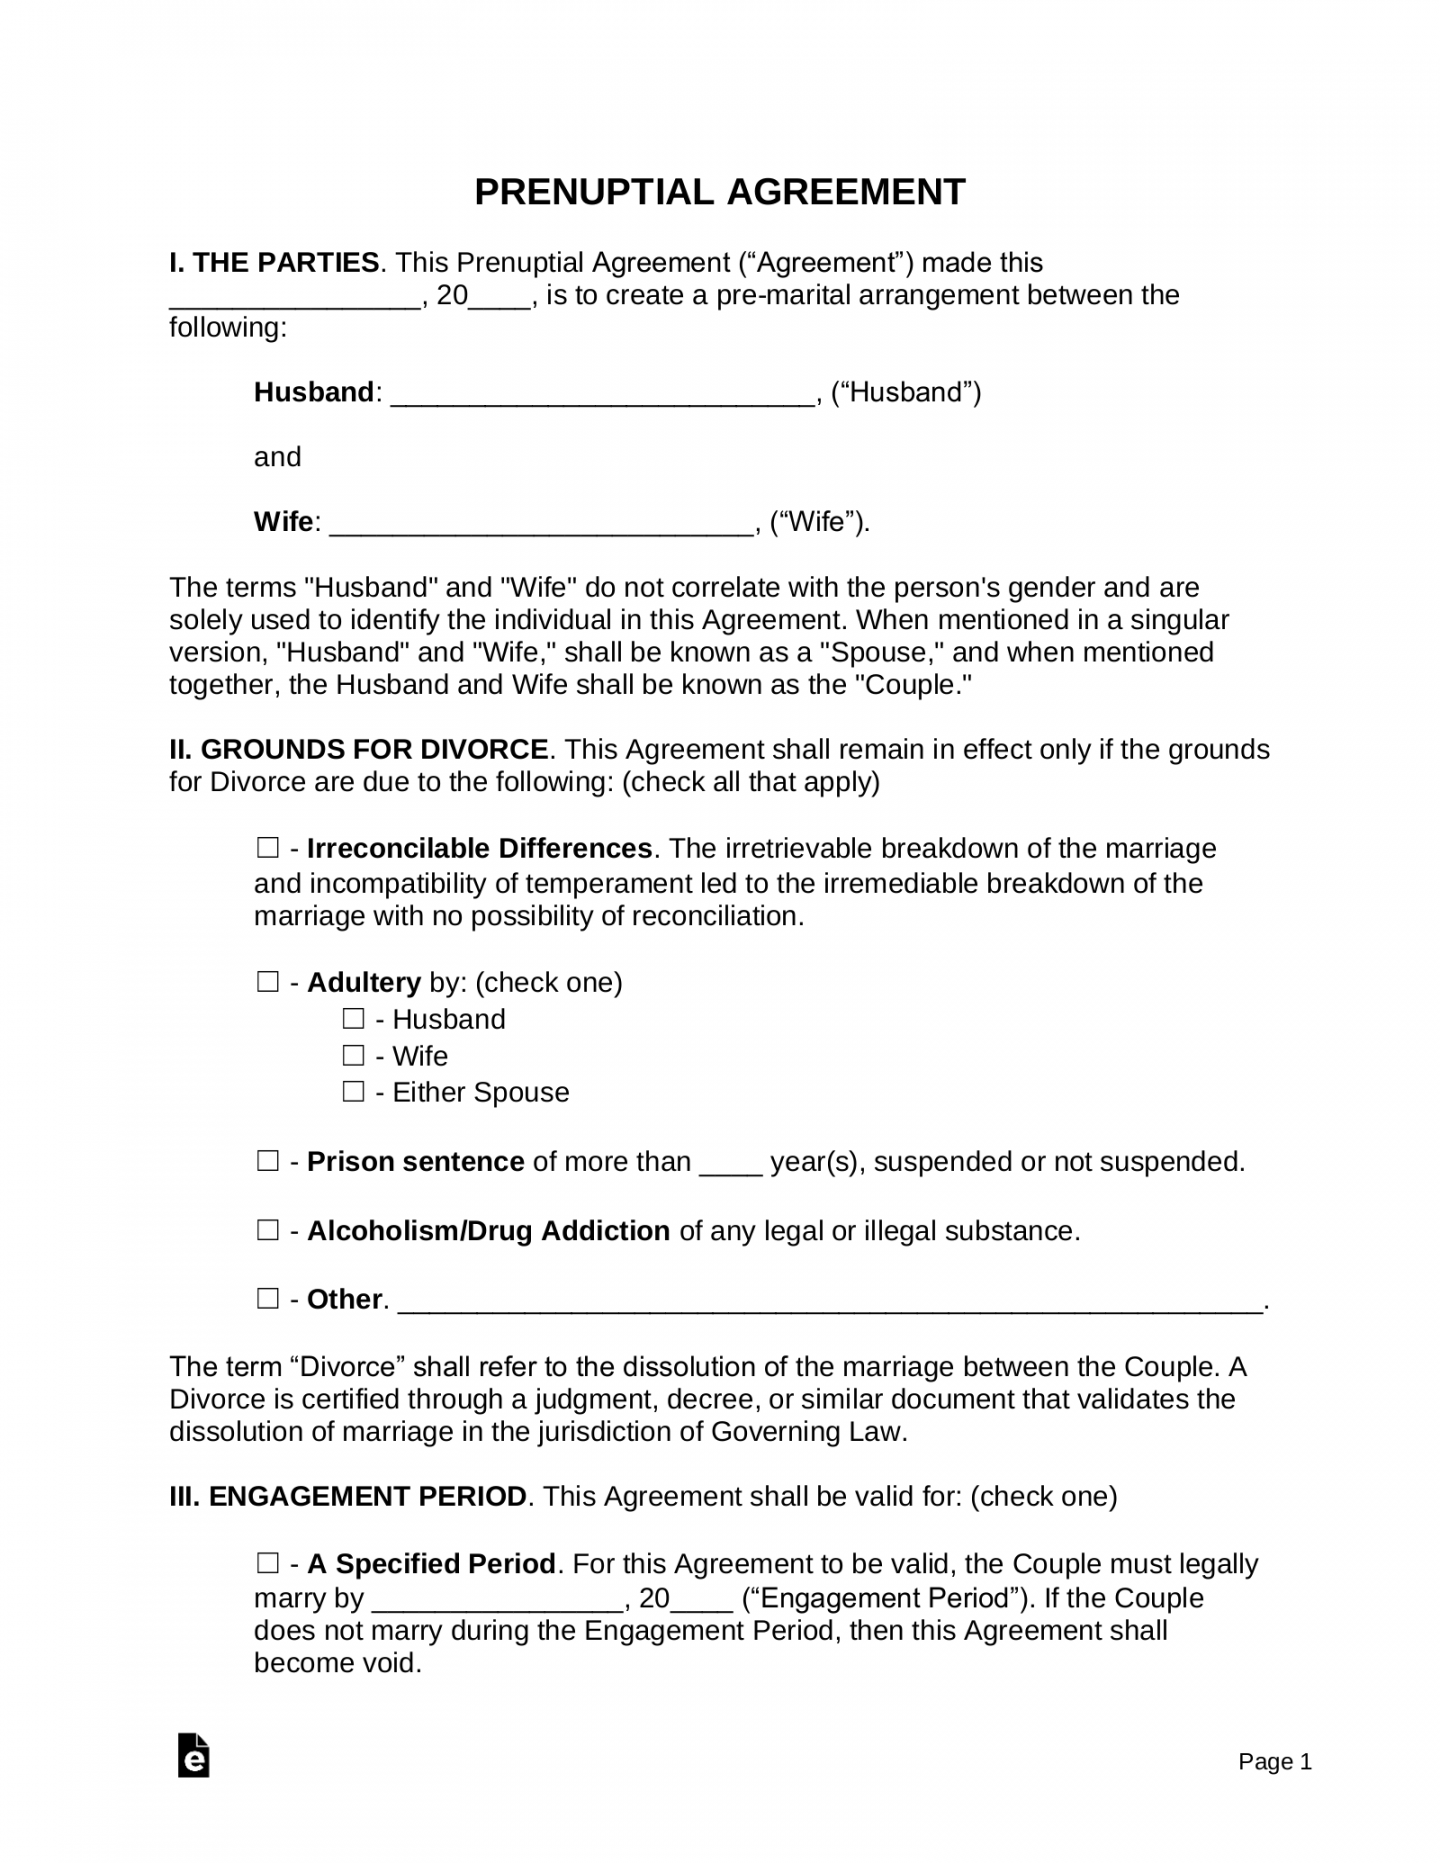 Free Prenuptial (Premarital) Agreement Template - PDF  Word – eForms - FREE Printables - Pdf Free Printable Prenuptial Agreement Form